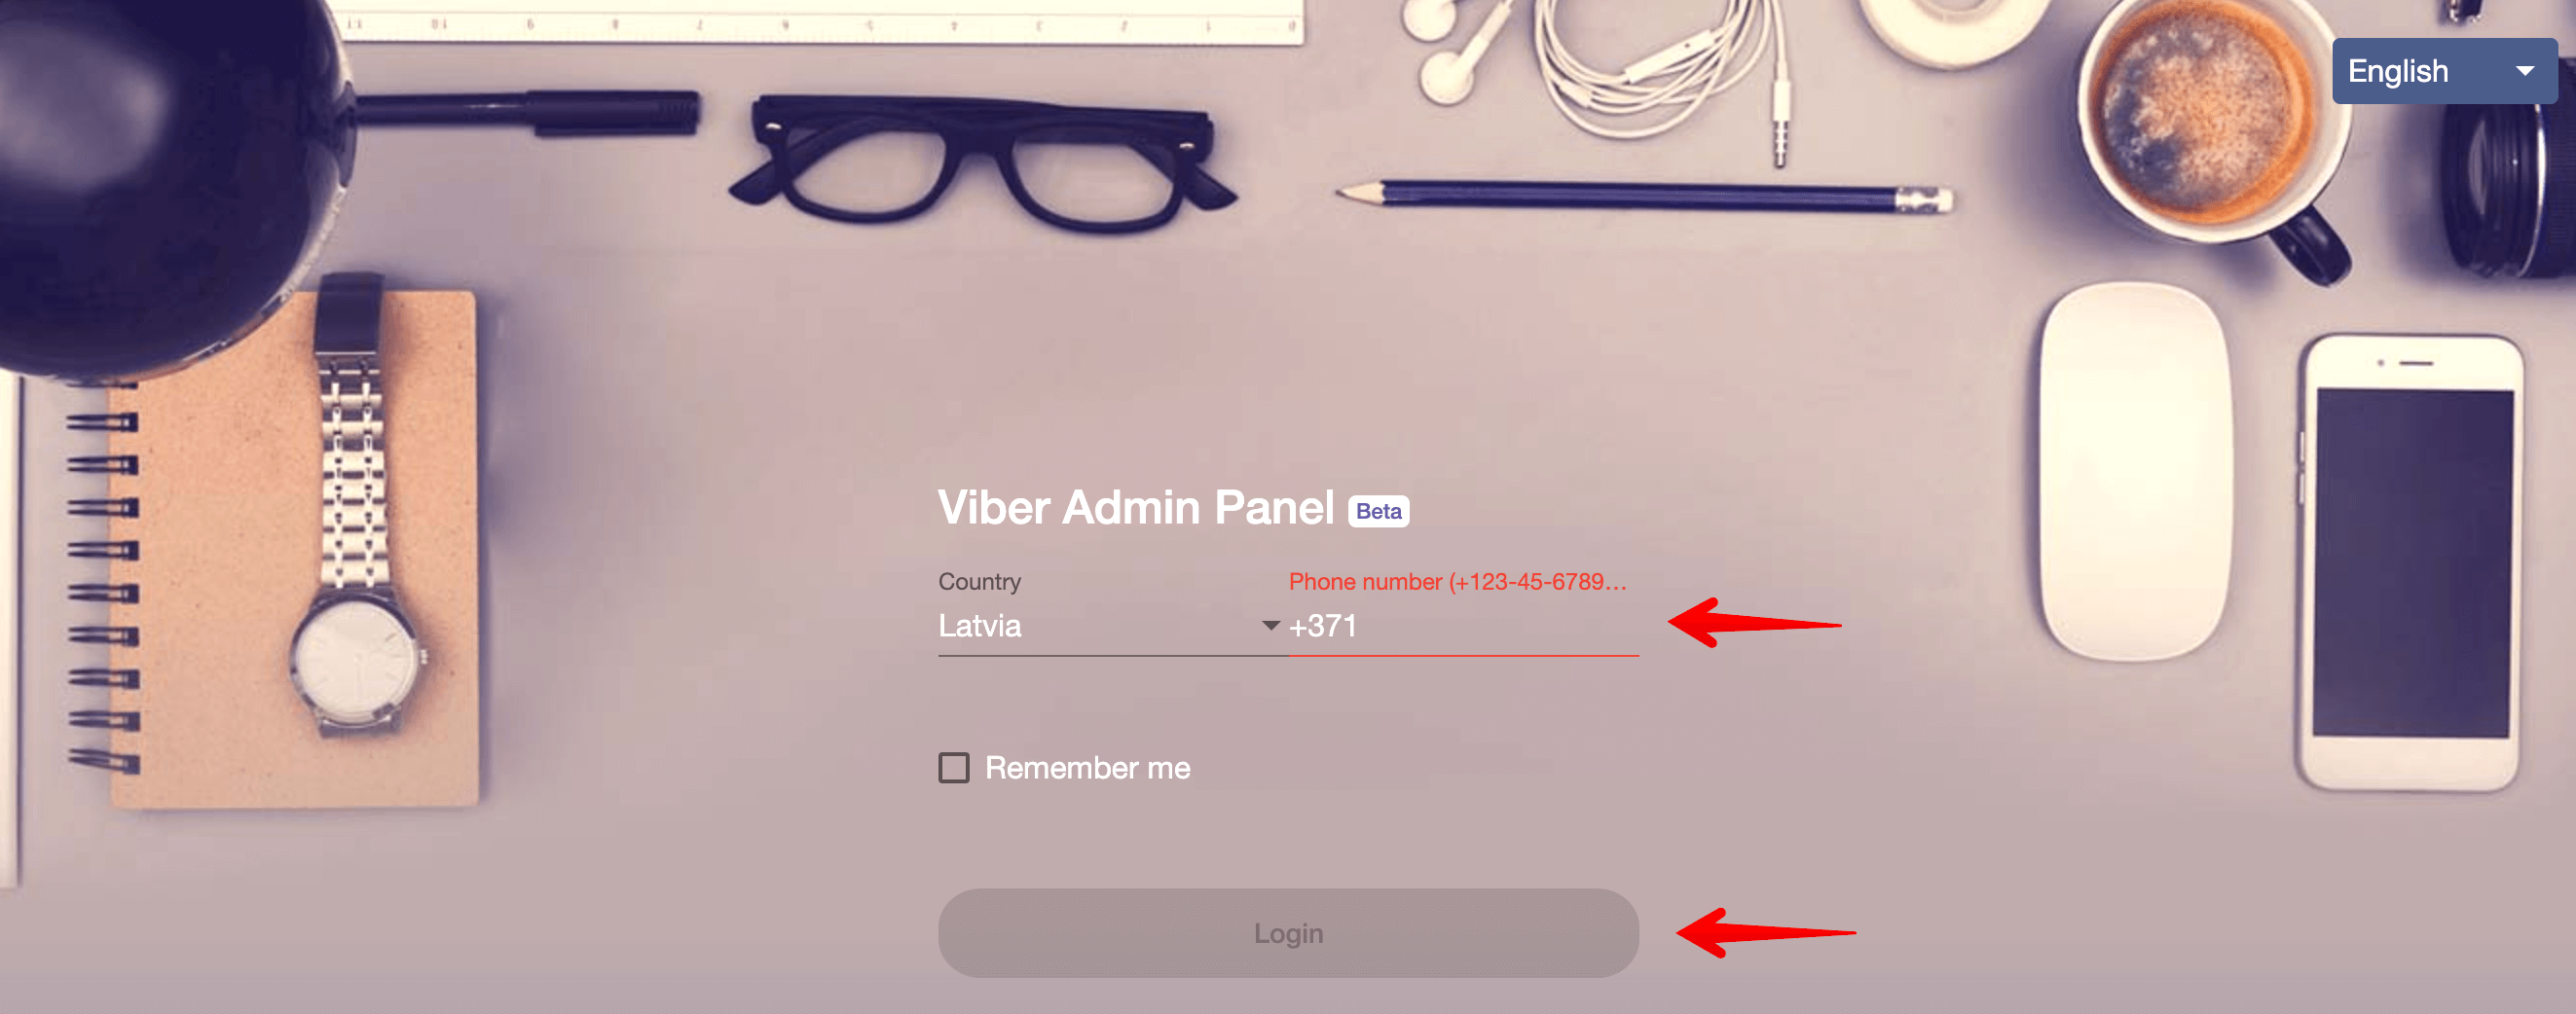 15 Viber - login to admin panel.png